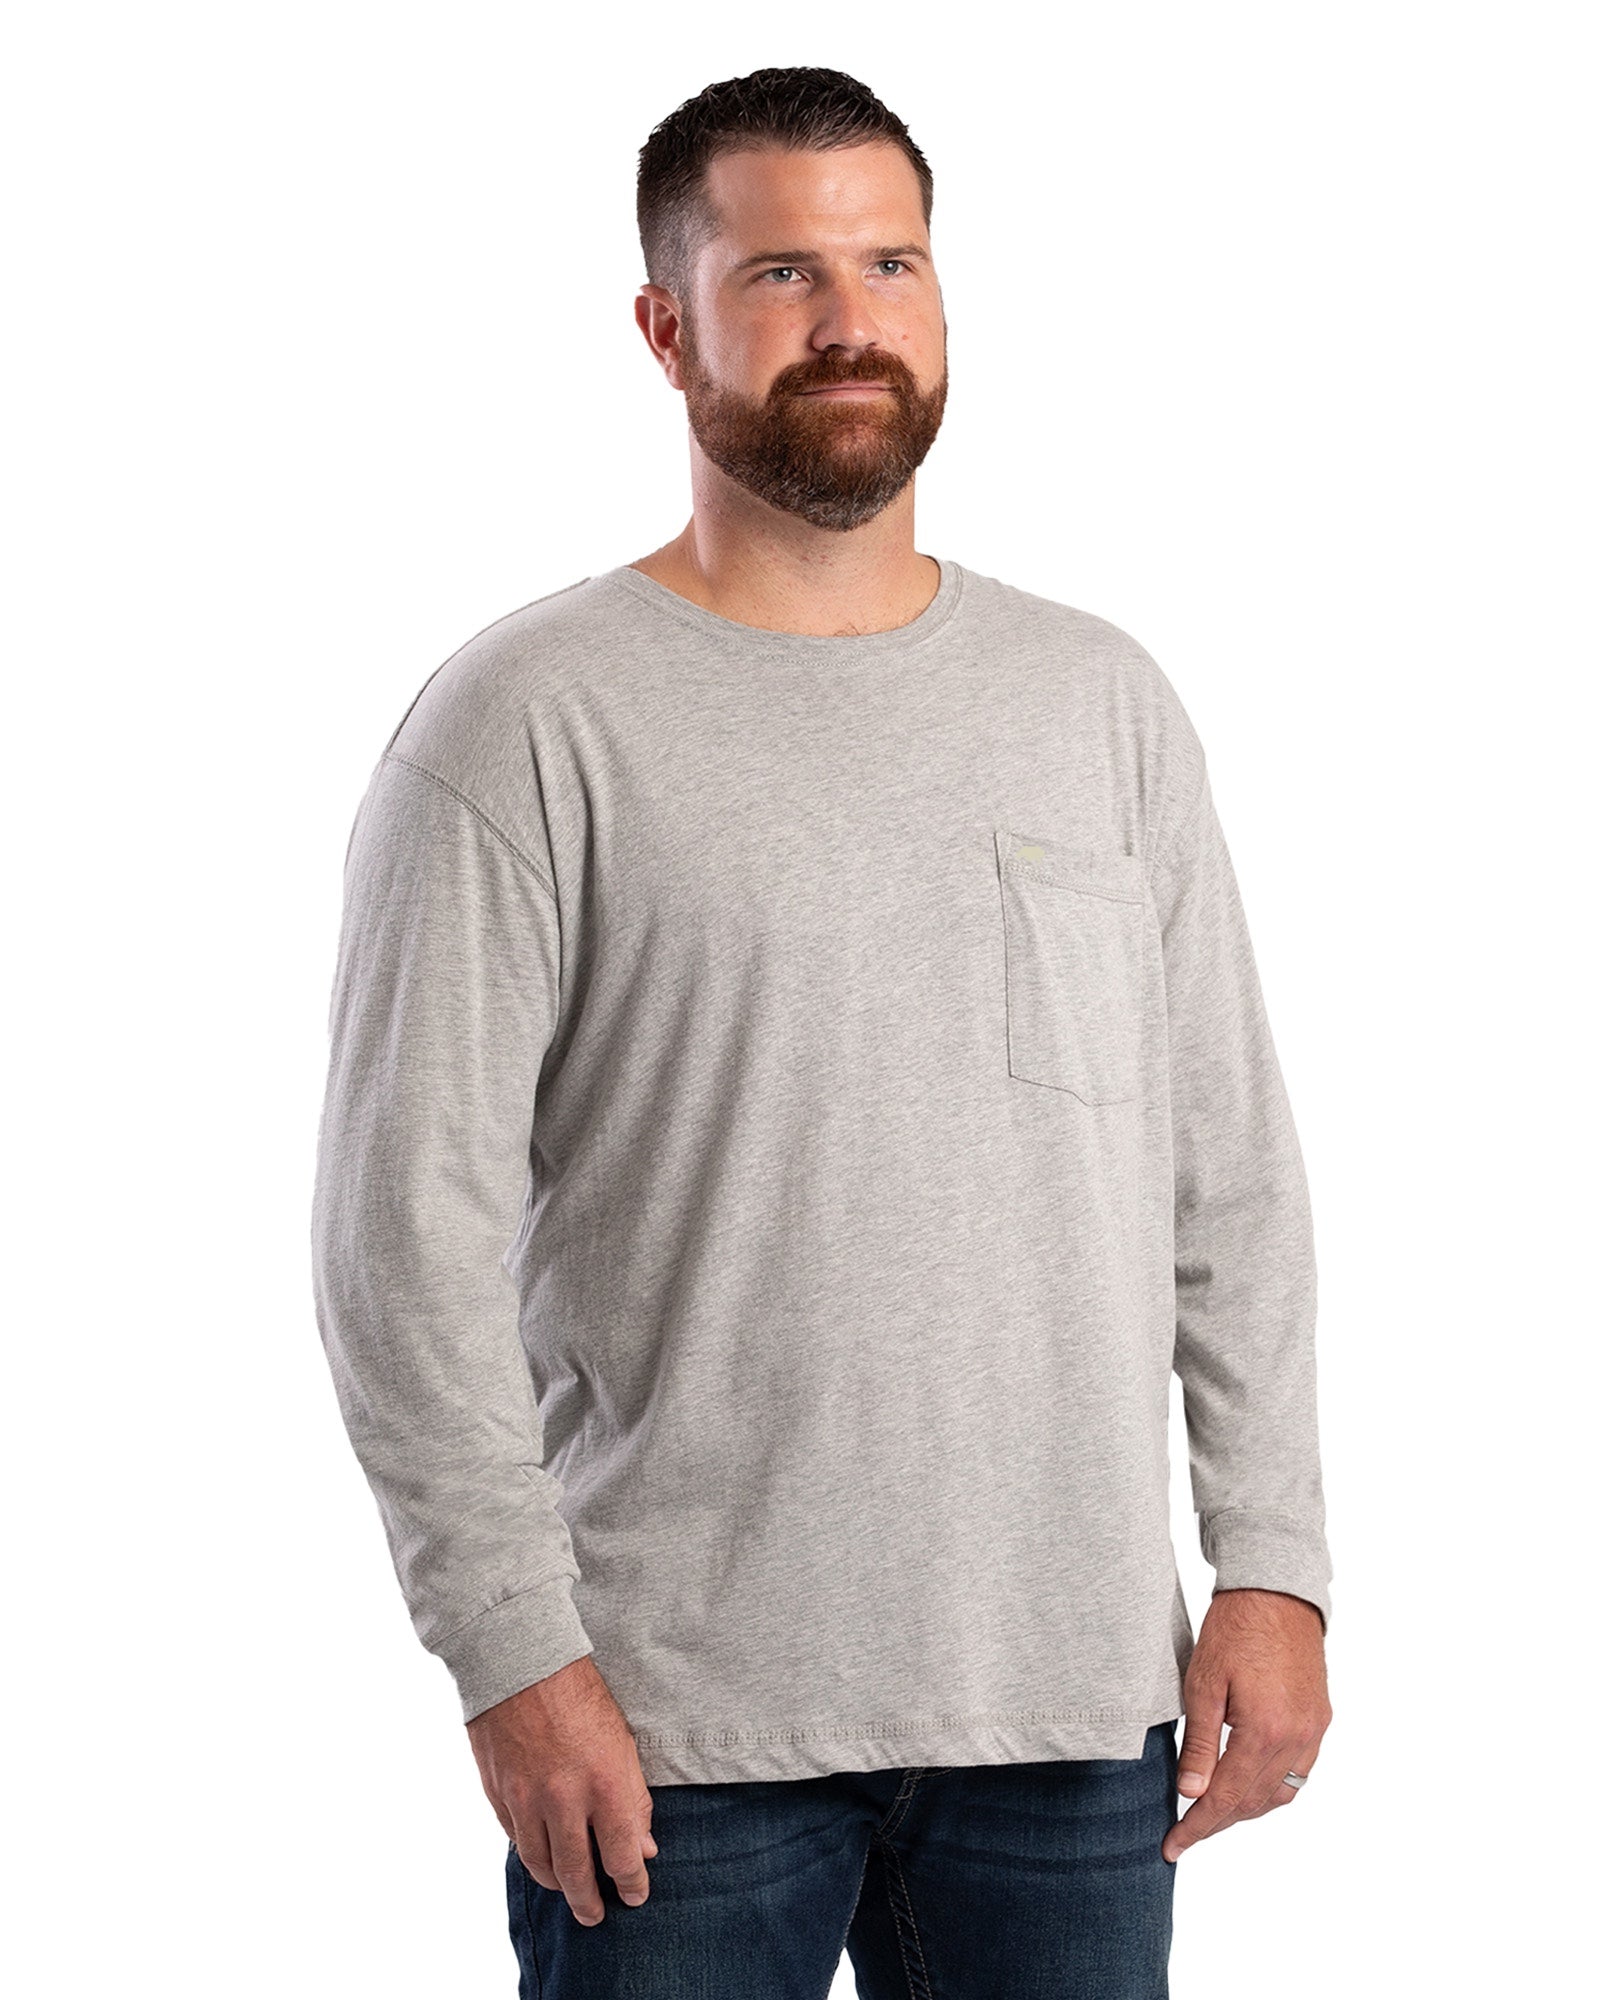 BSM40GY Performance Long Sleeve Pocket T-Shirt